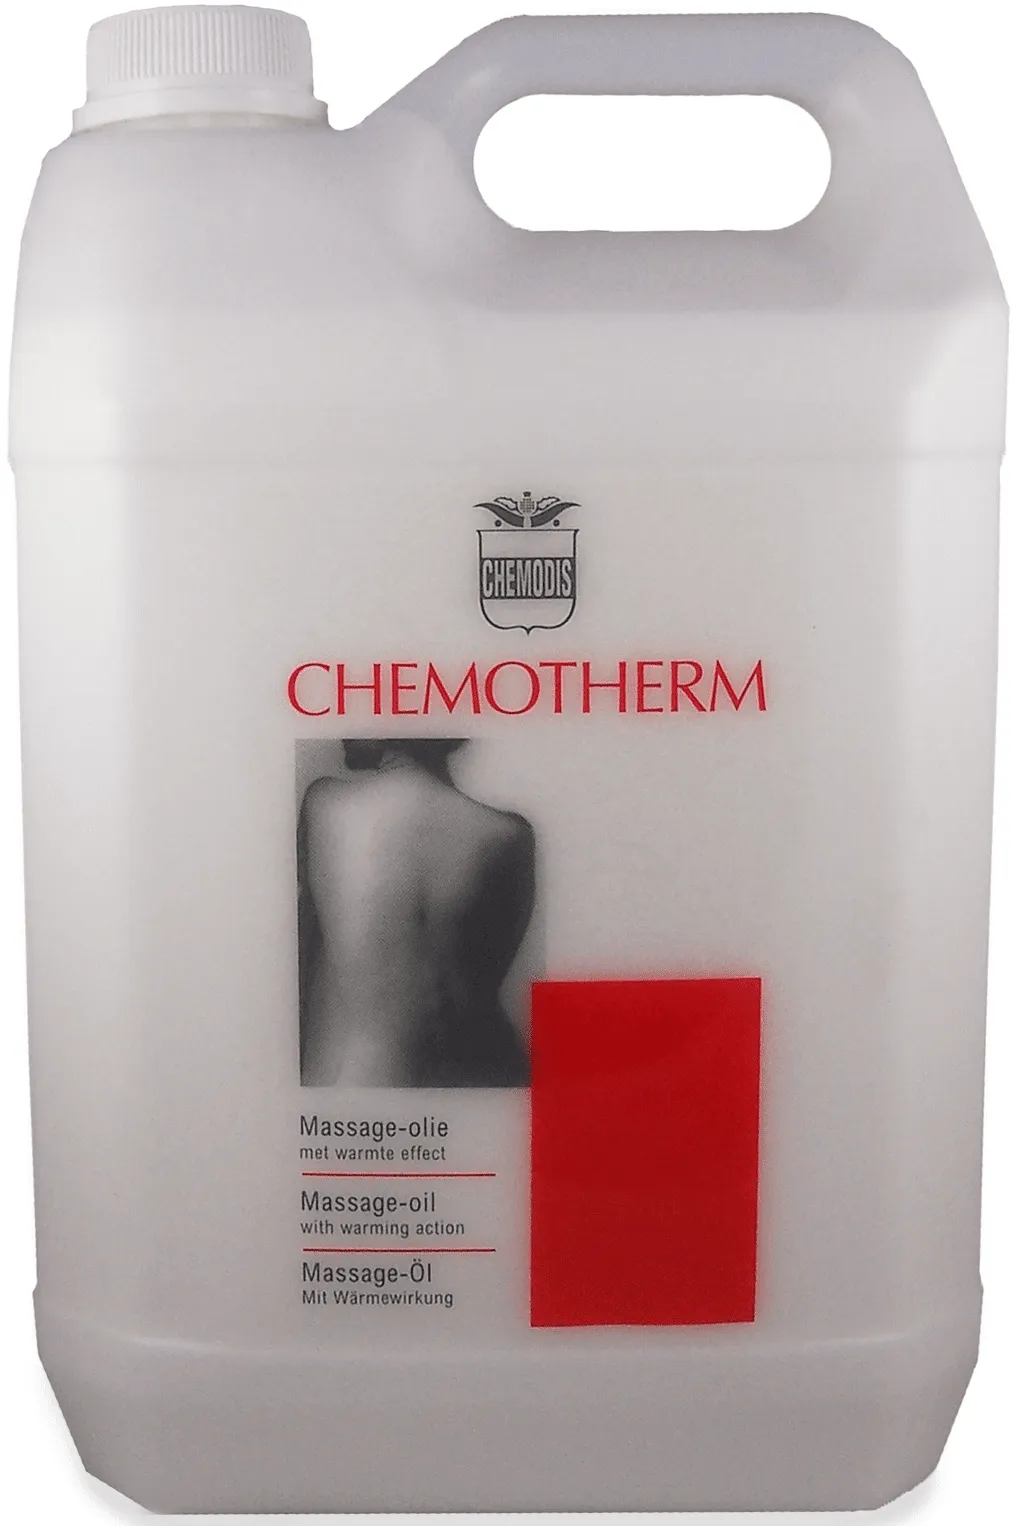 Chemotherm 500 ml massage olie